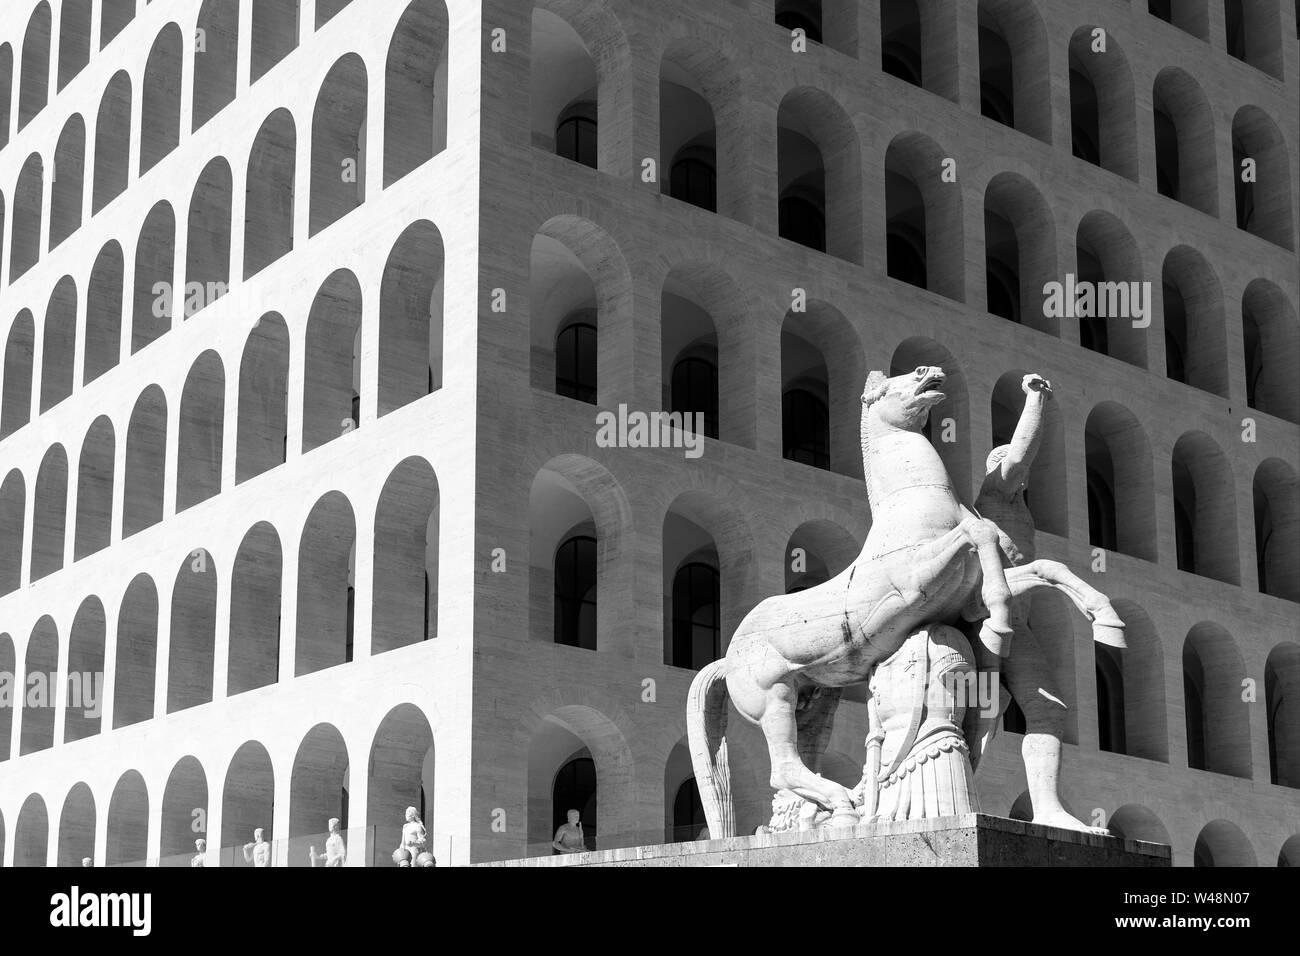 Le Palazzo della Civiltà del Lavoro, conçu en 1937 par Marcello Piacentini, pour l'Esposizione Universale Roma ou EUR, Rome, Italie. Banque D'Images